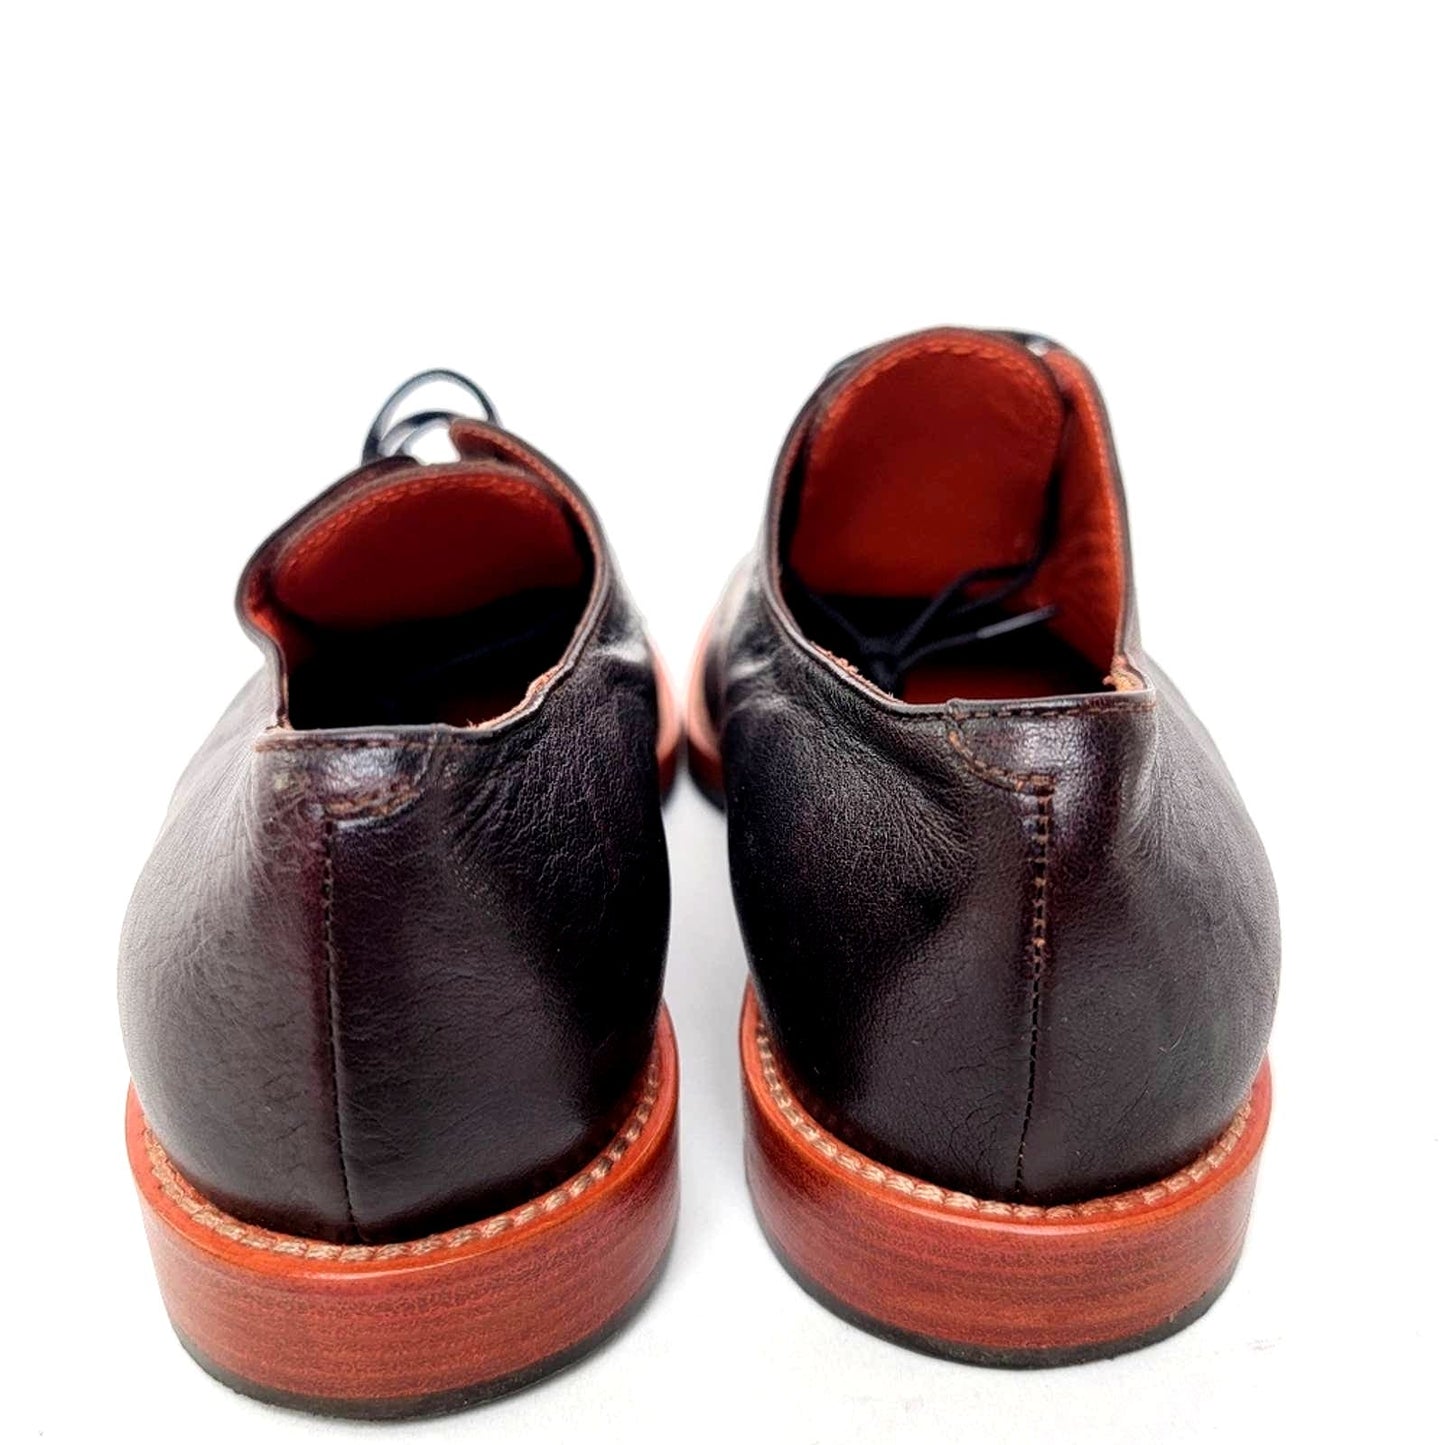 Barneys New York x Henry Cuir Italian Designer Oxford Shoes - 6